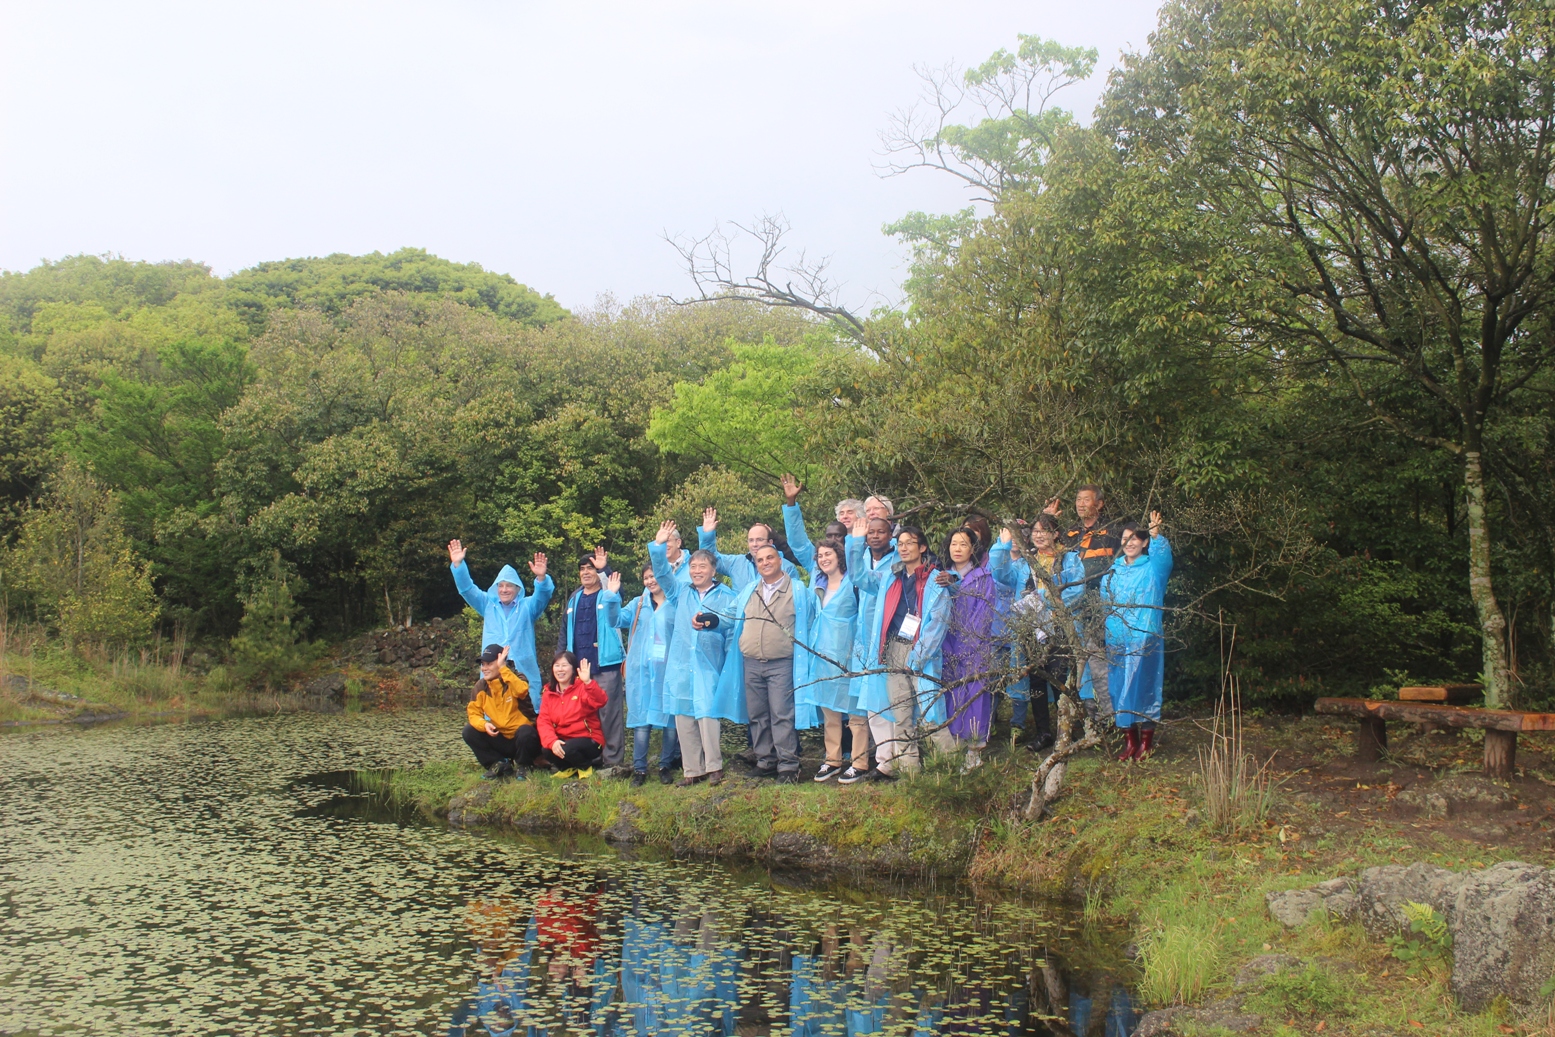 Workshop participants at Ramsar site “Dongbaeckdongsan (Camellia Hill)”